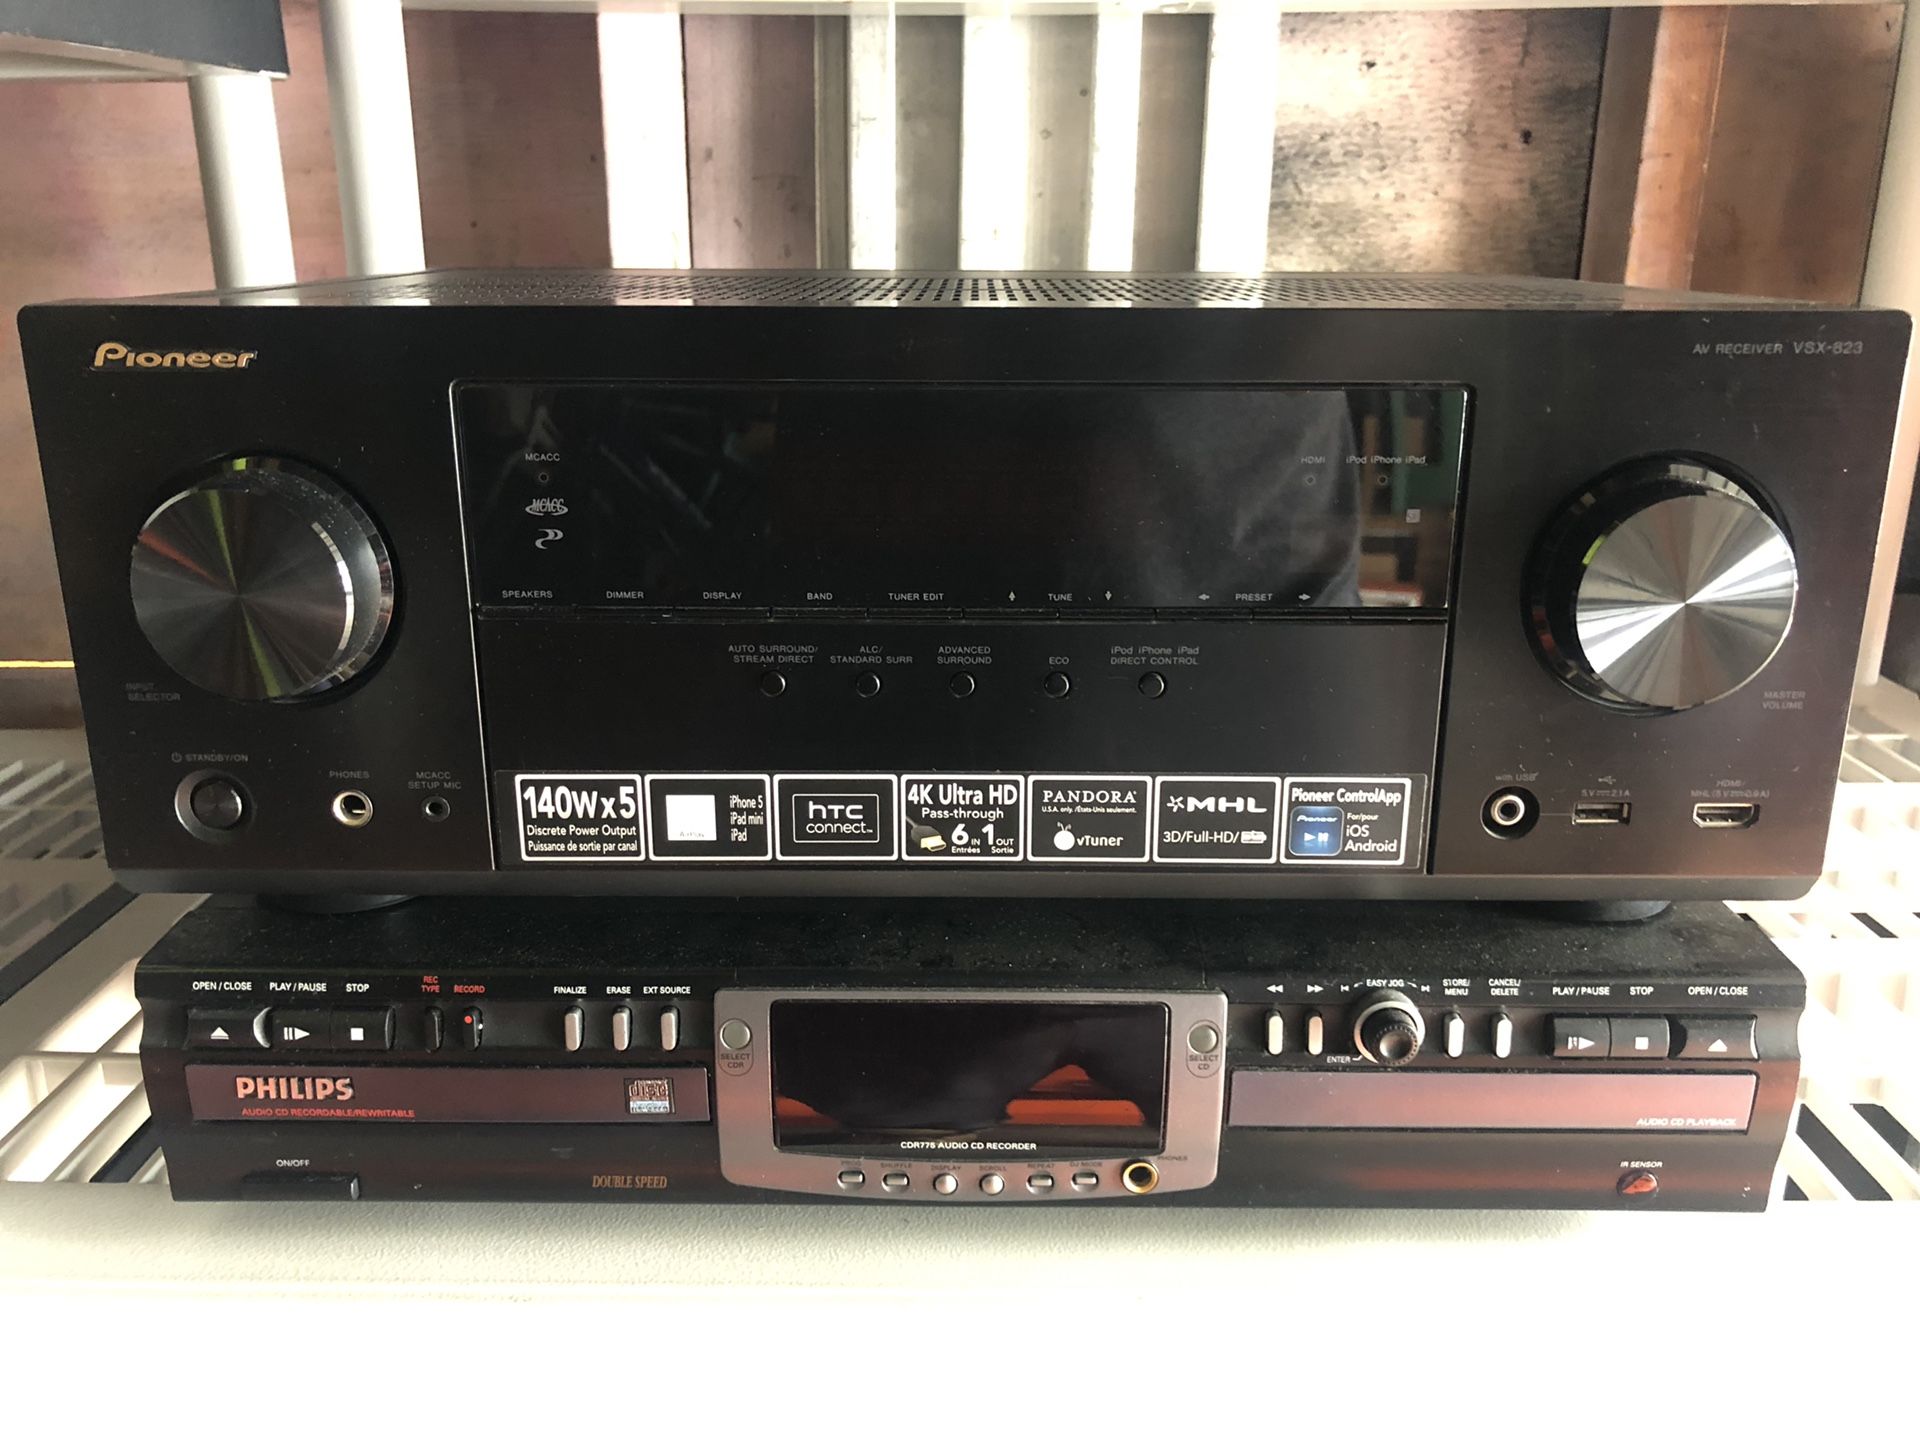 Pioneer VSX-823 4k A/V receiver & Philips CD recorder